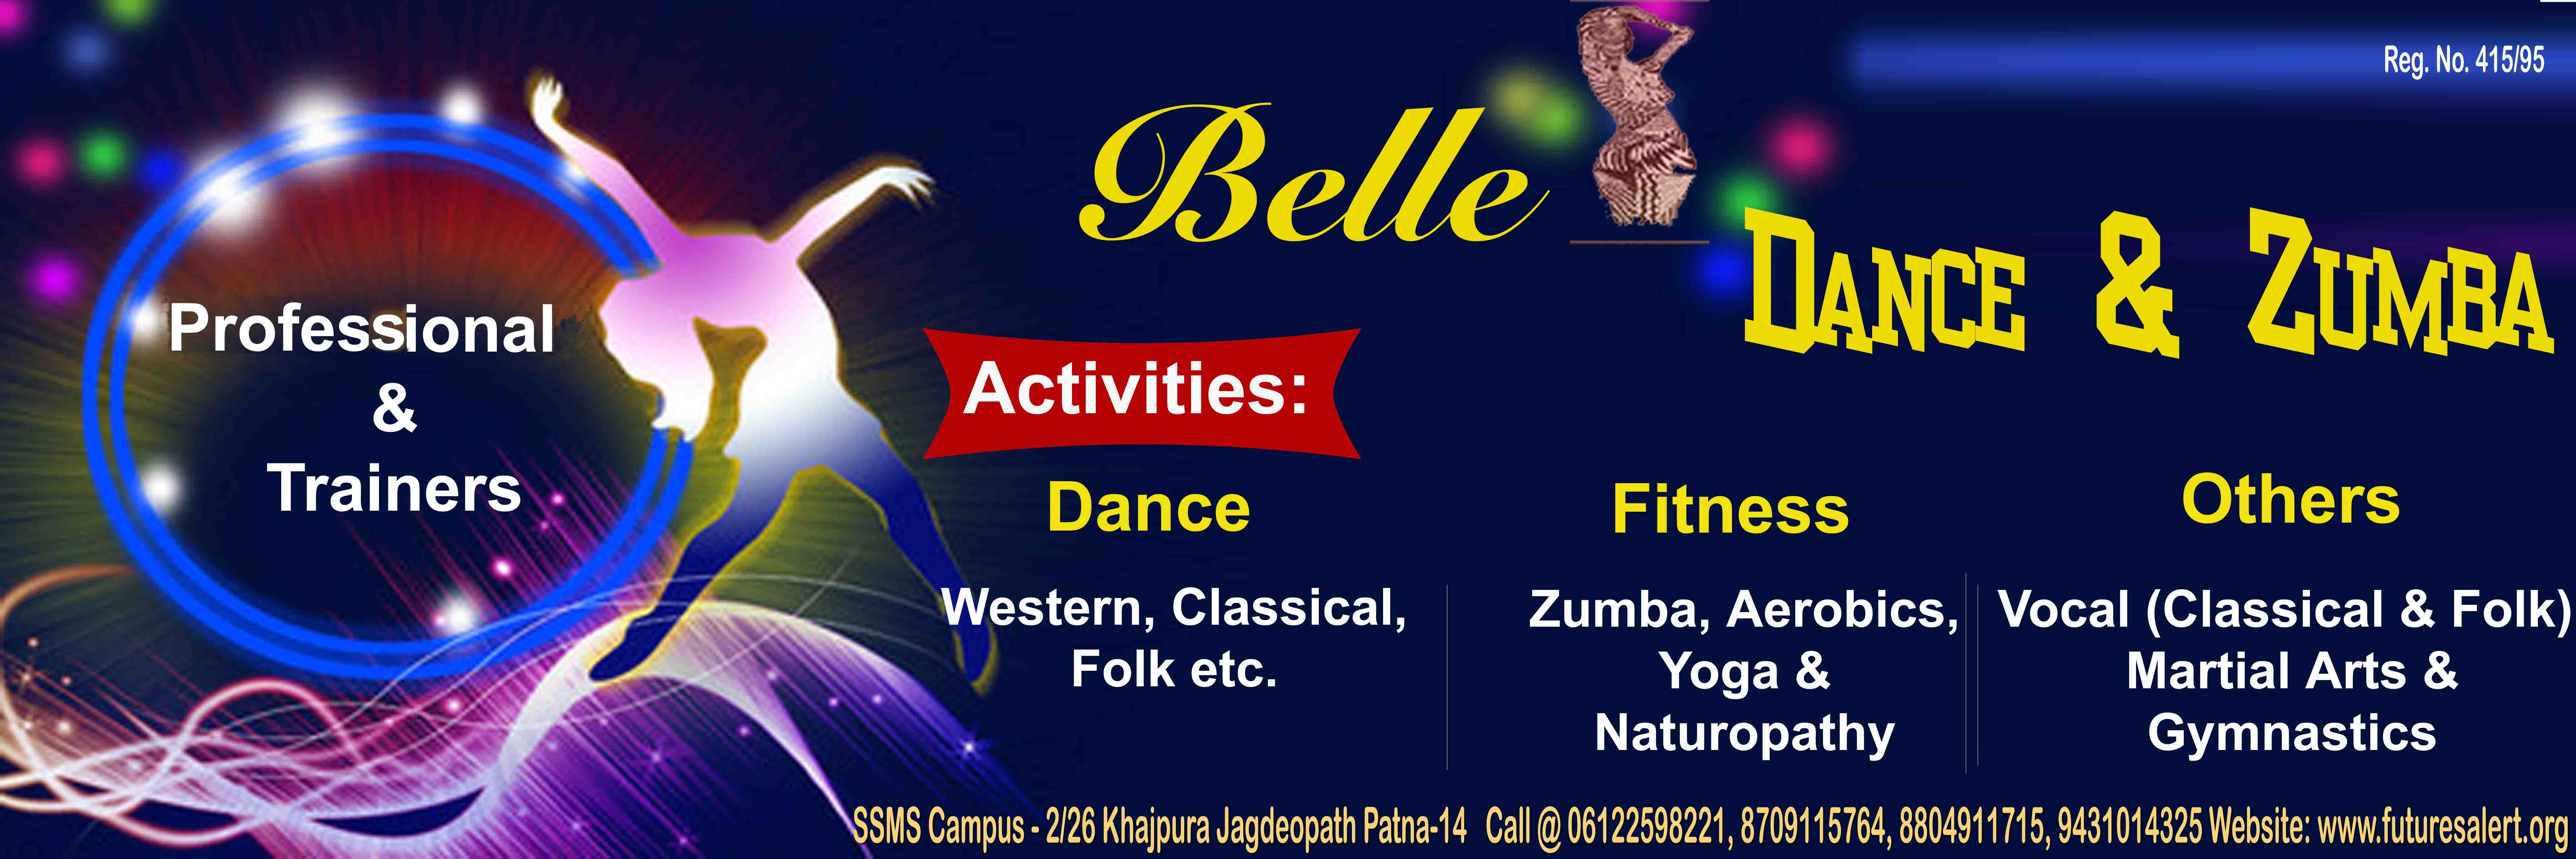 Belle dance zumba banner